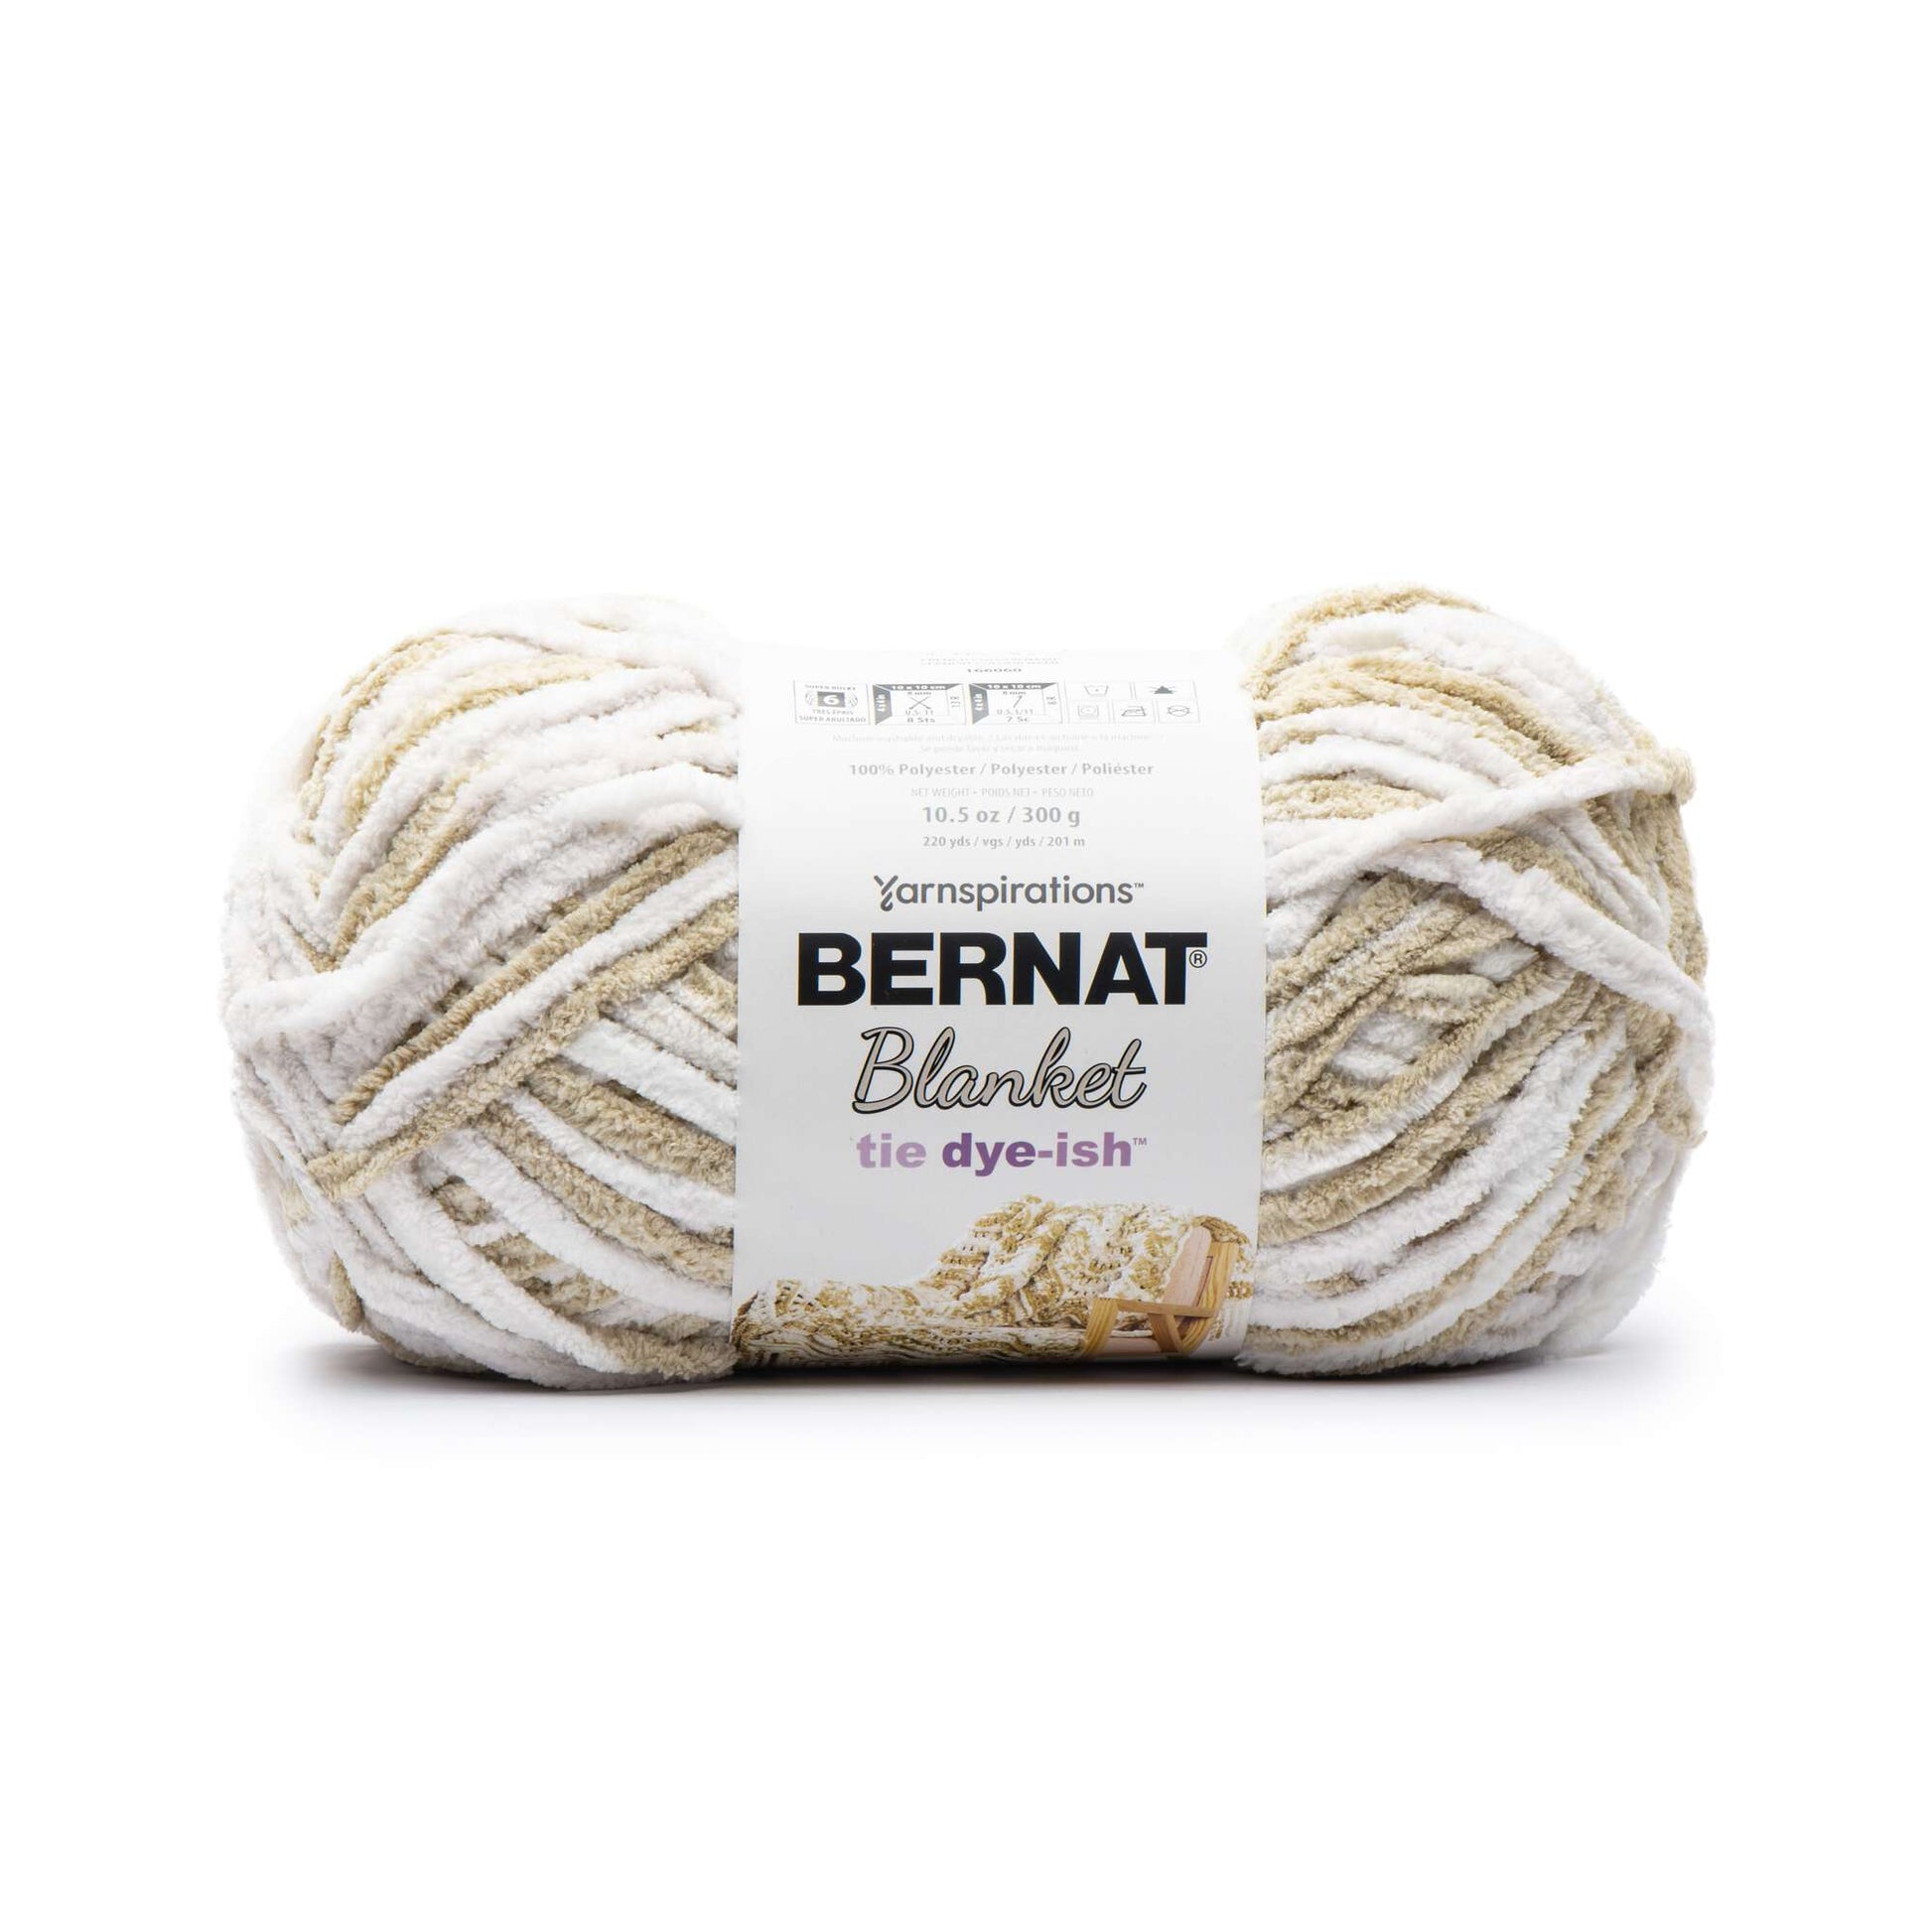 Bernat Blanket Tie Dye-ish Yarn (300g/10.5oz)